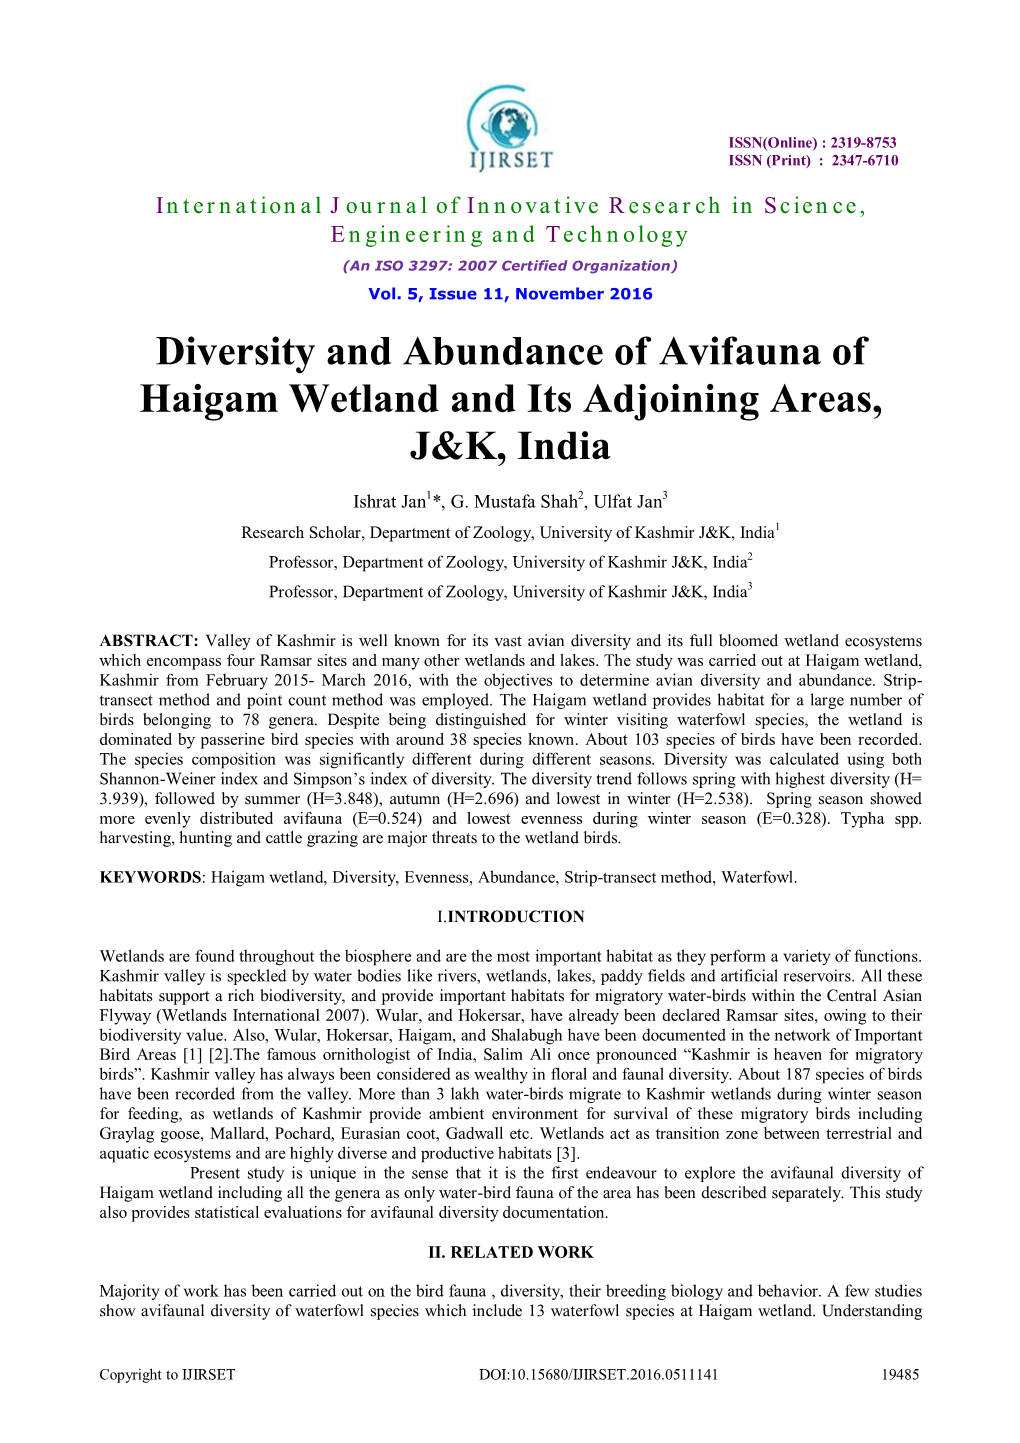 Diversity and Abundance of Avifauna of Haigam Wetland and Its Adjoining Areas, J&K, India